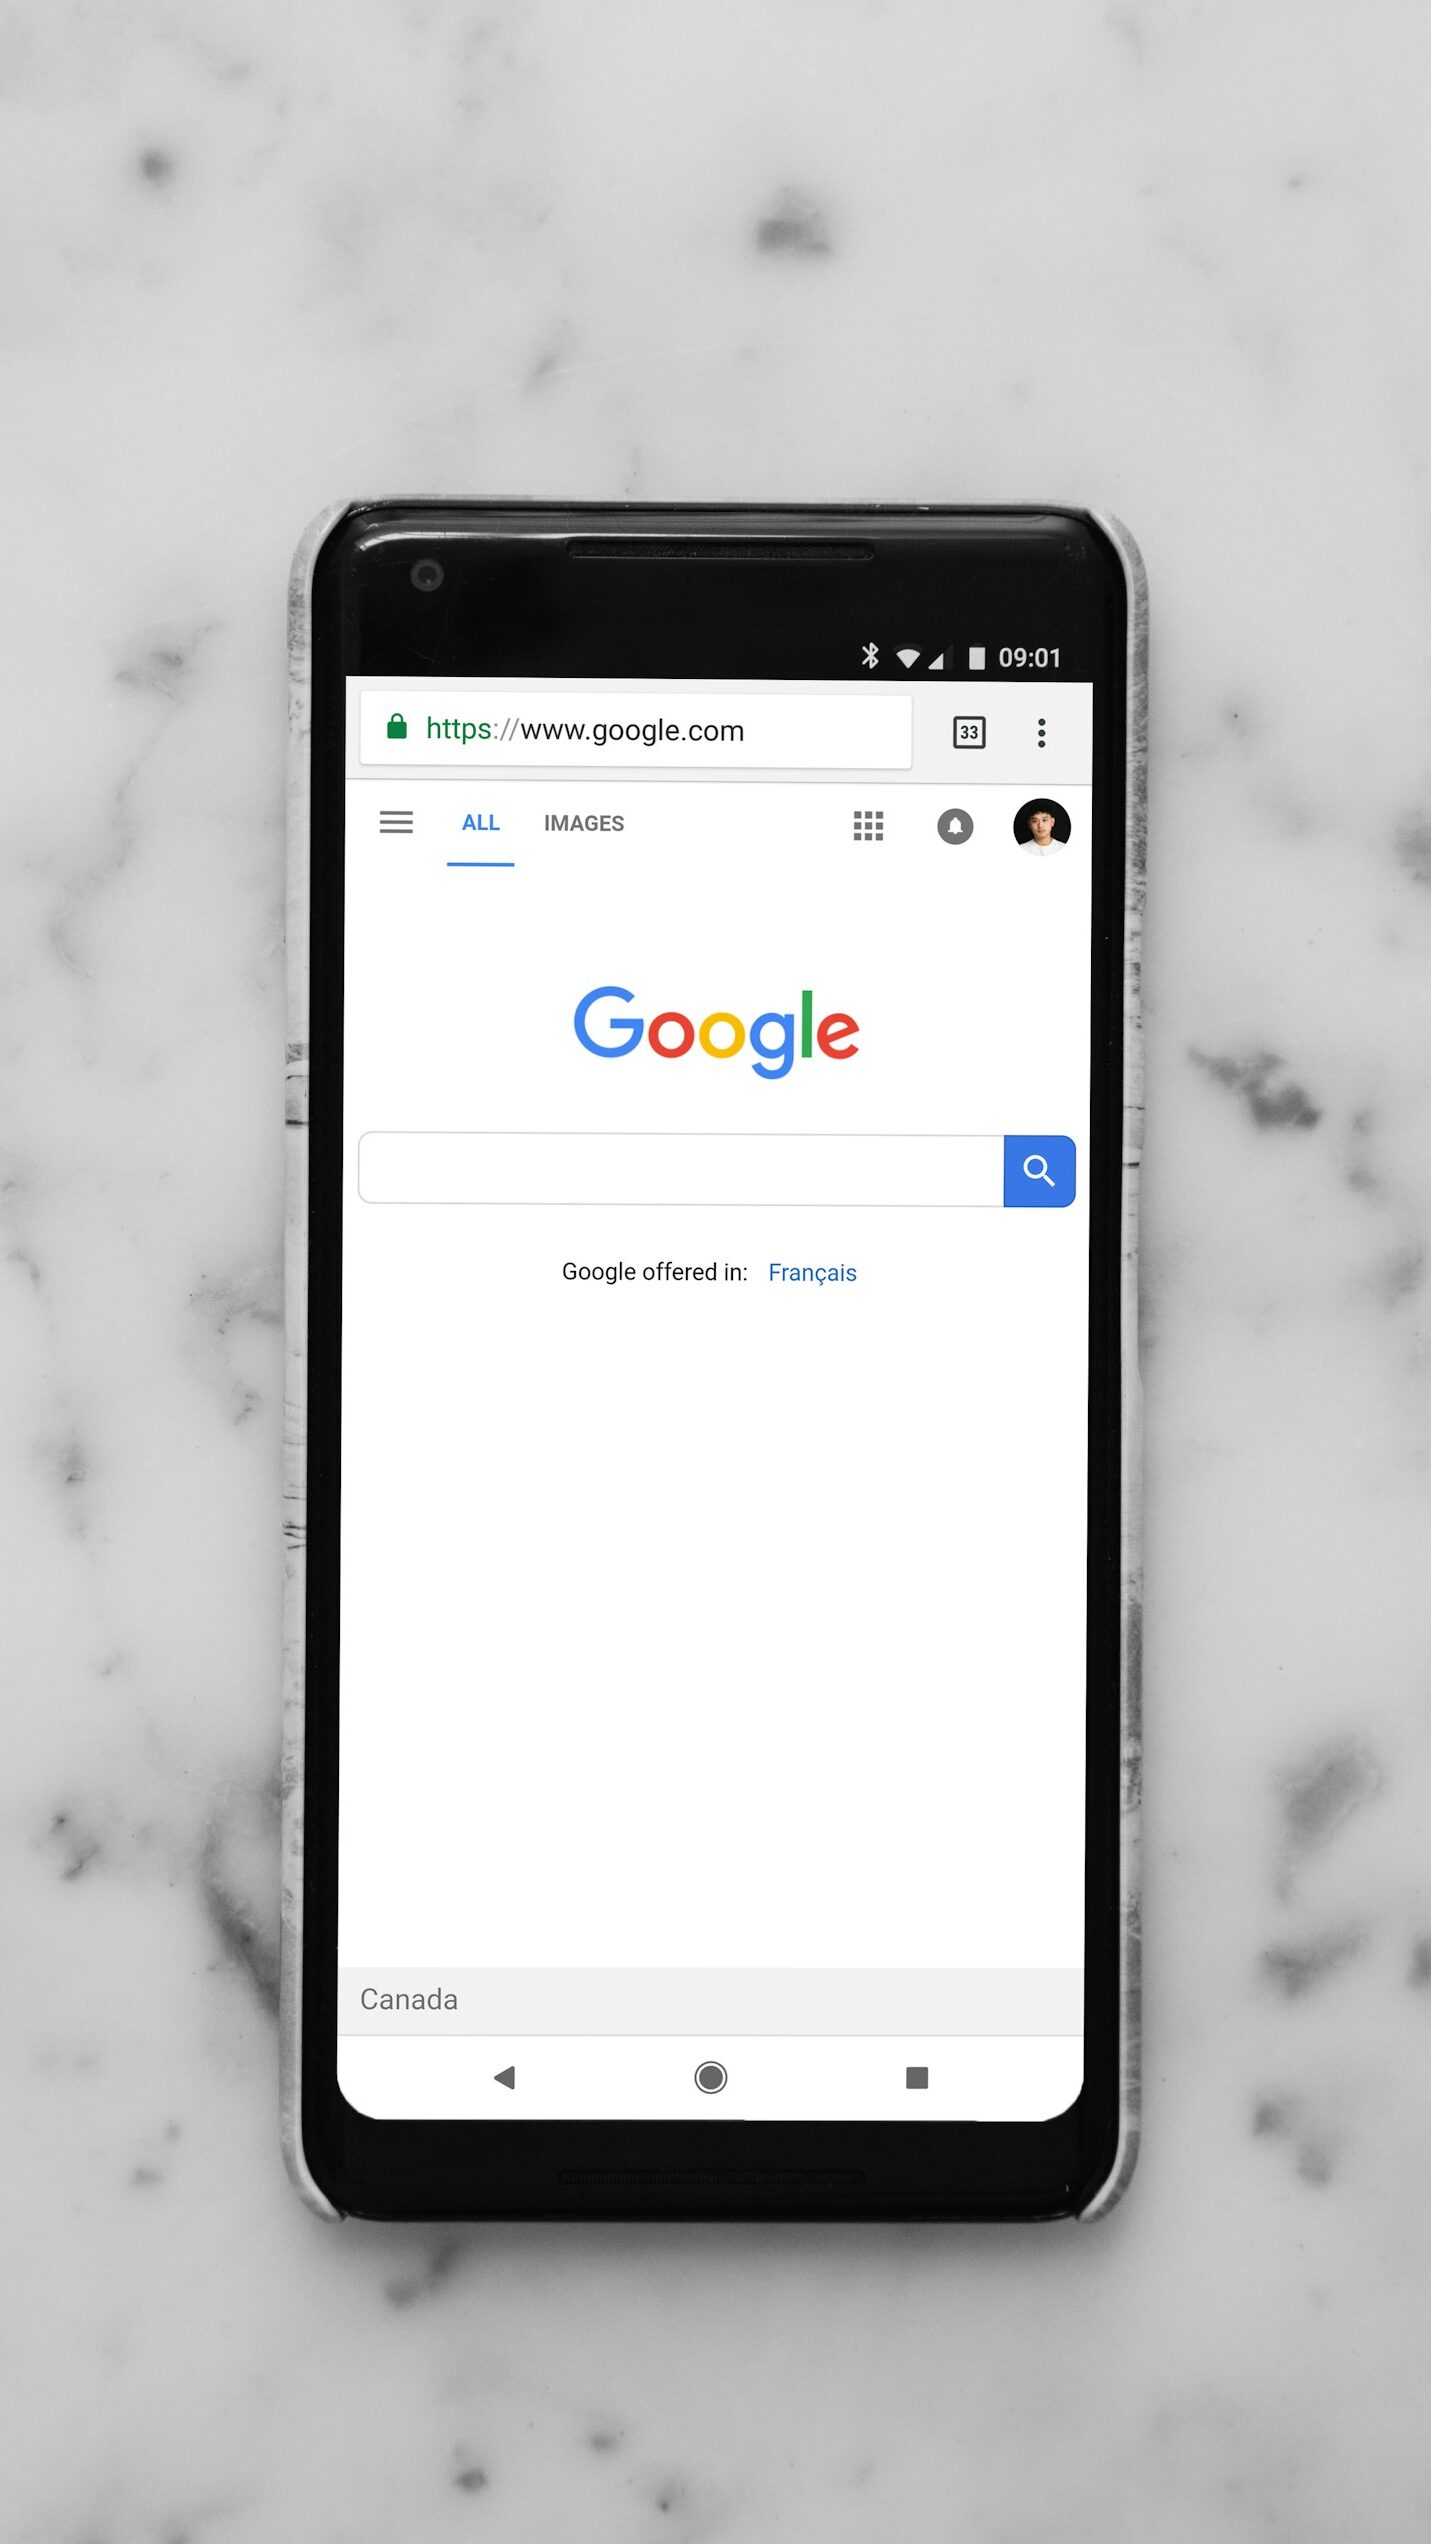 A phone displaying Google.